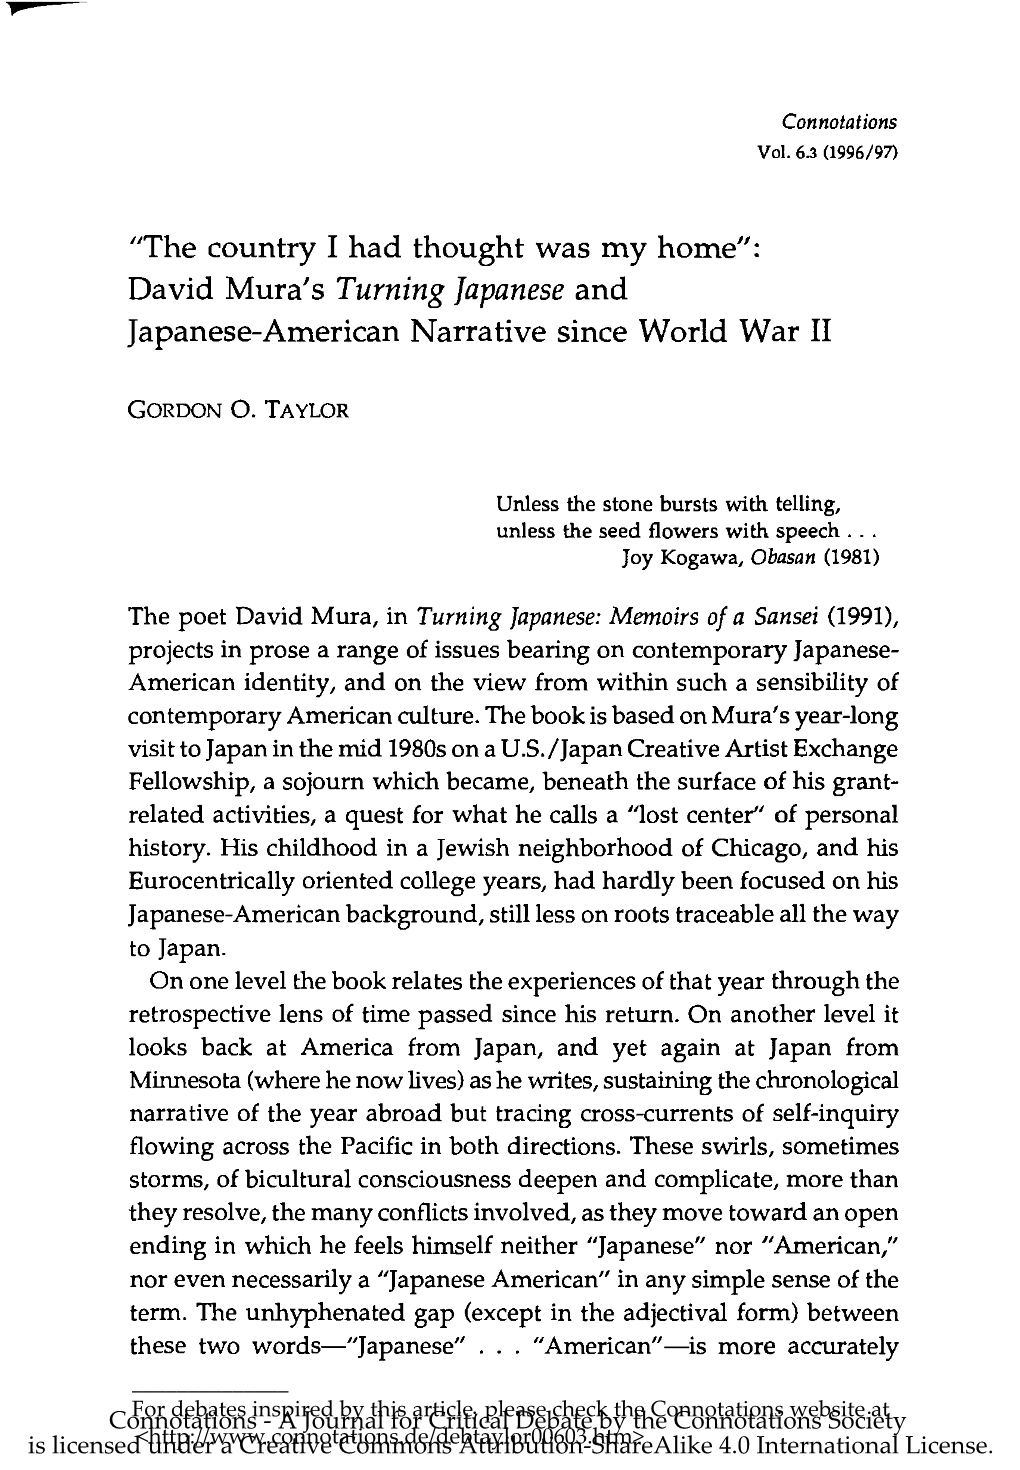 David Mura's Turning Japanese and Japanese-American Narrative Since World War 11